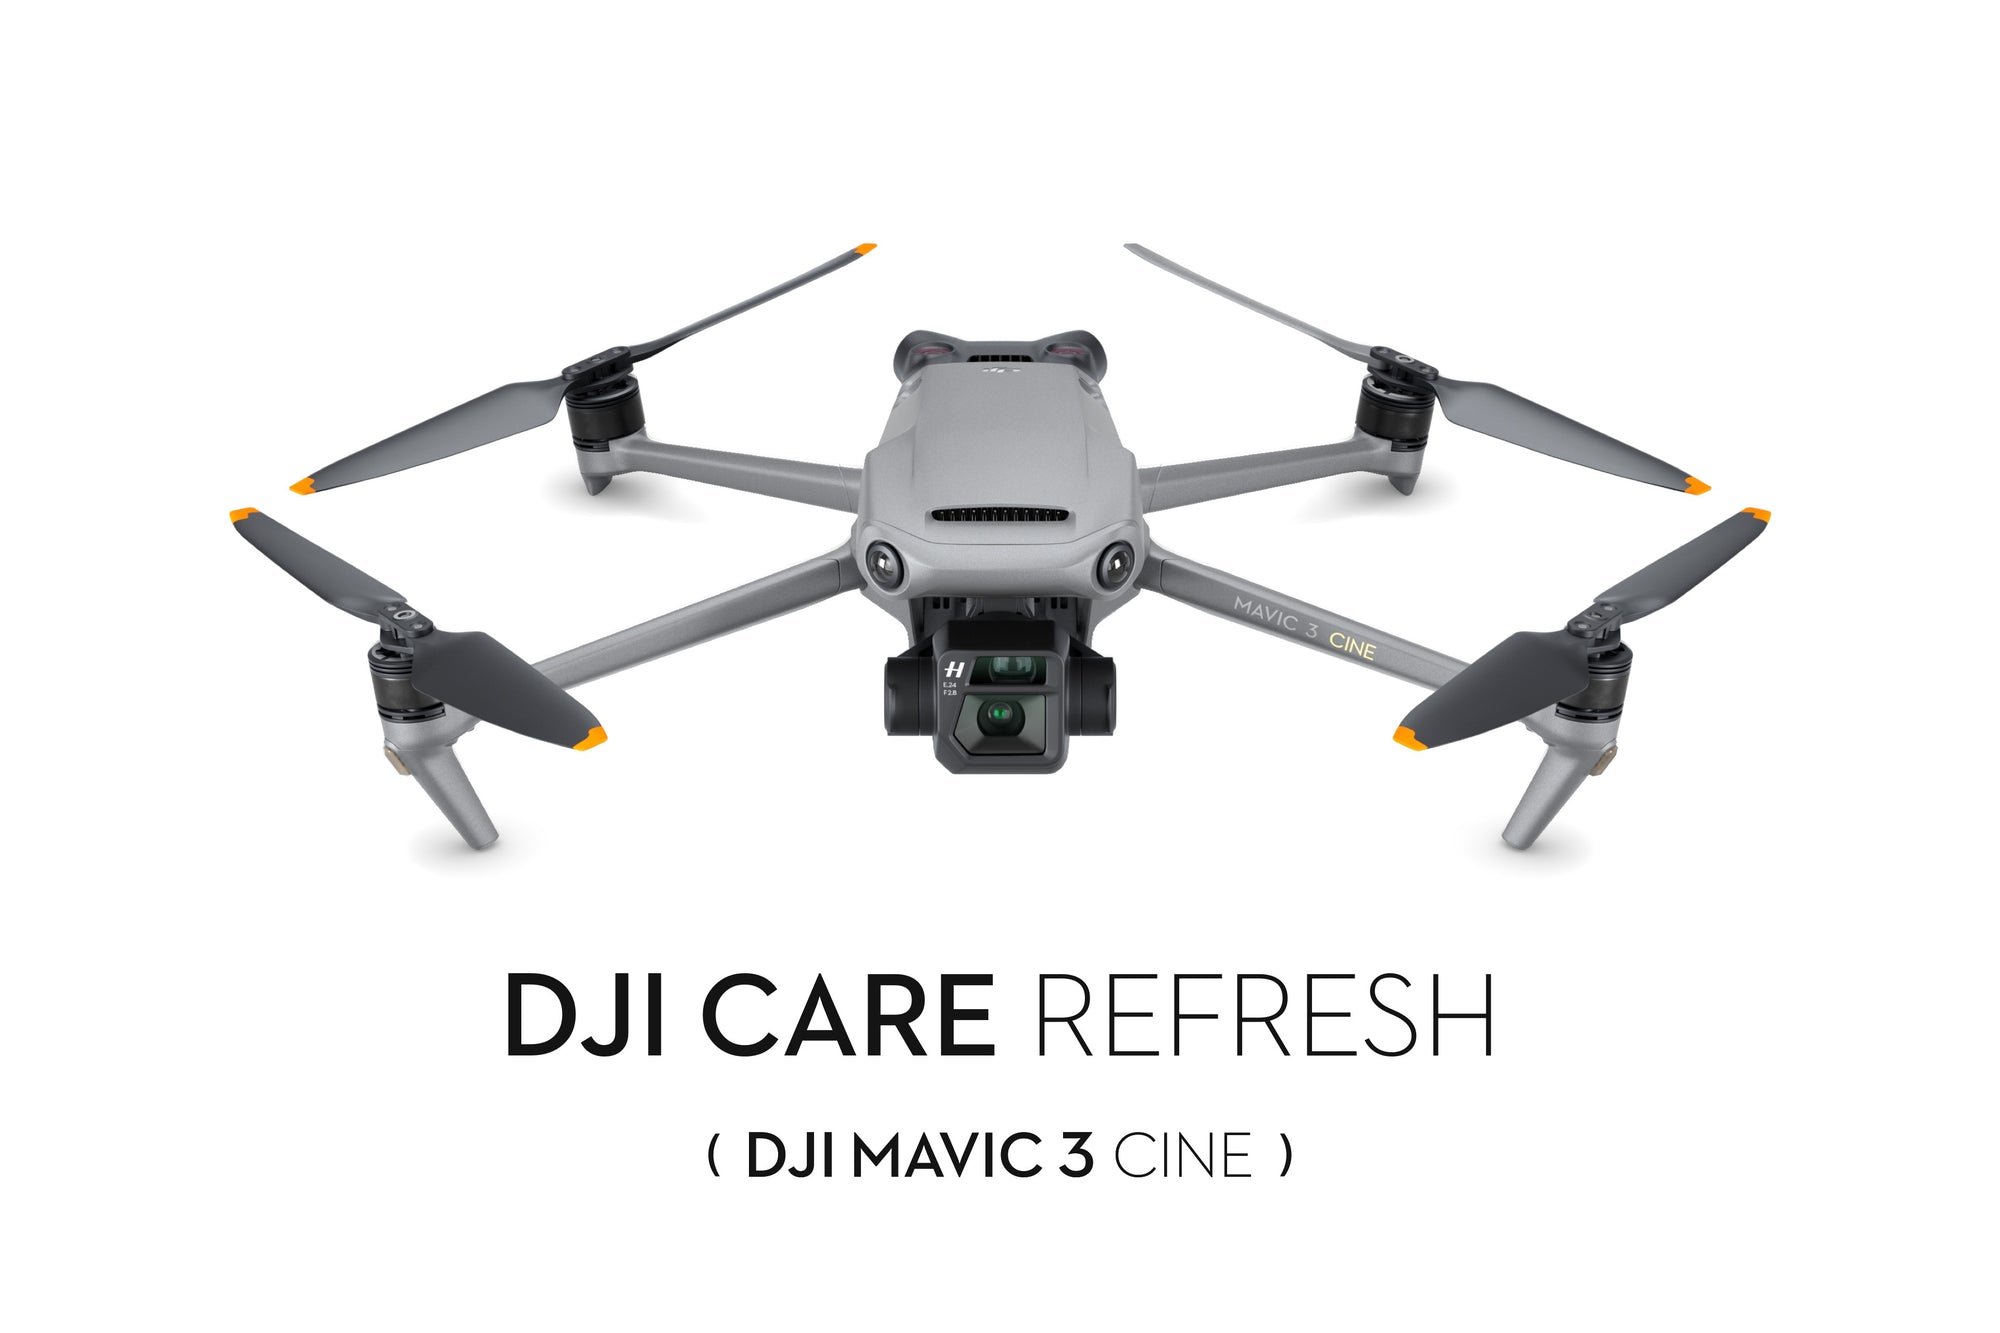 DJI Care Refresh 2-Year Plan (DJI Mavic 3 CINE)